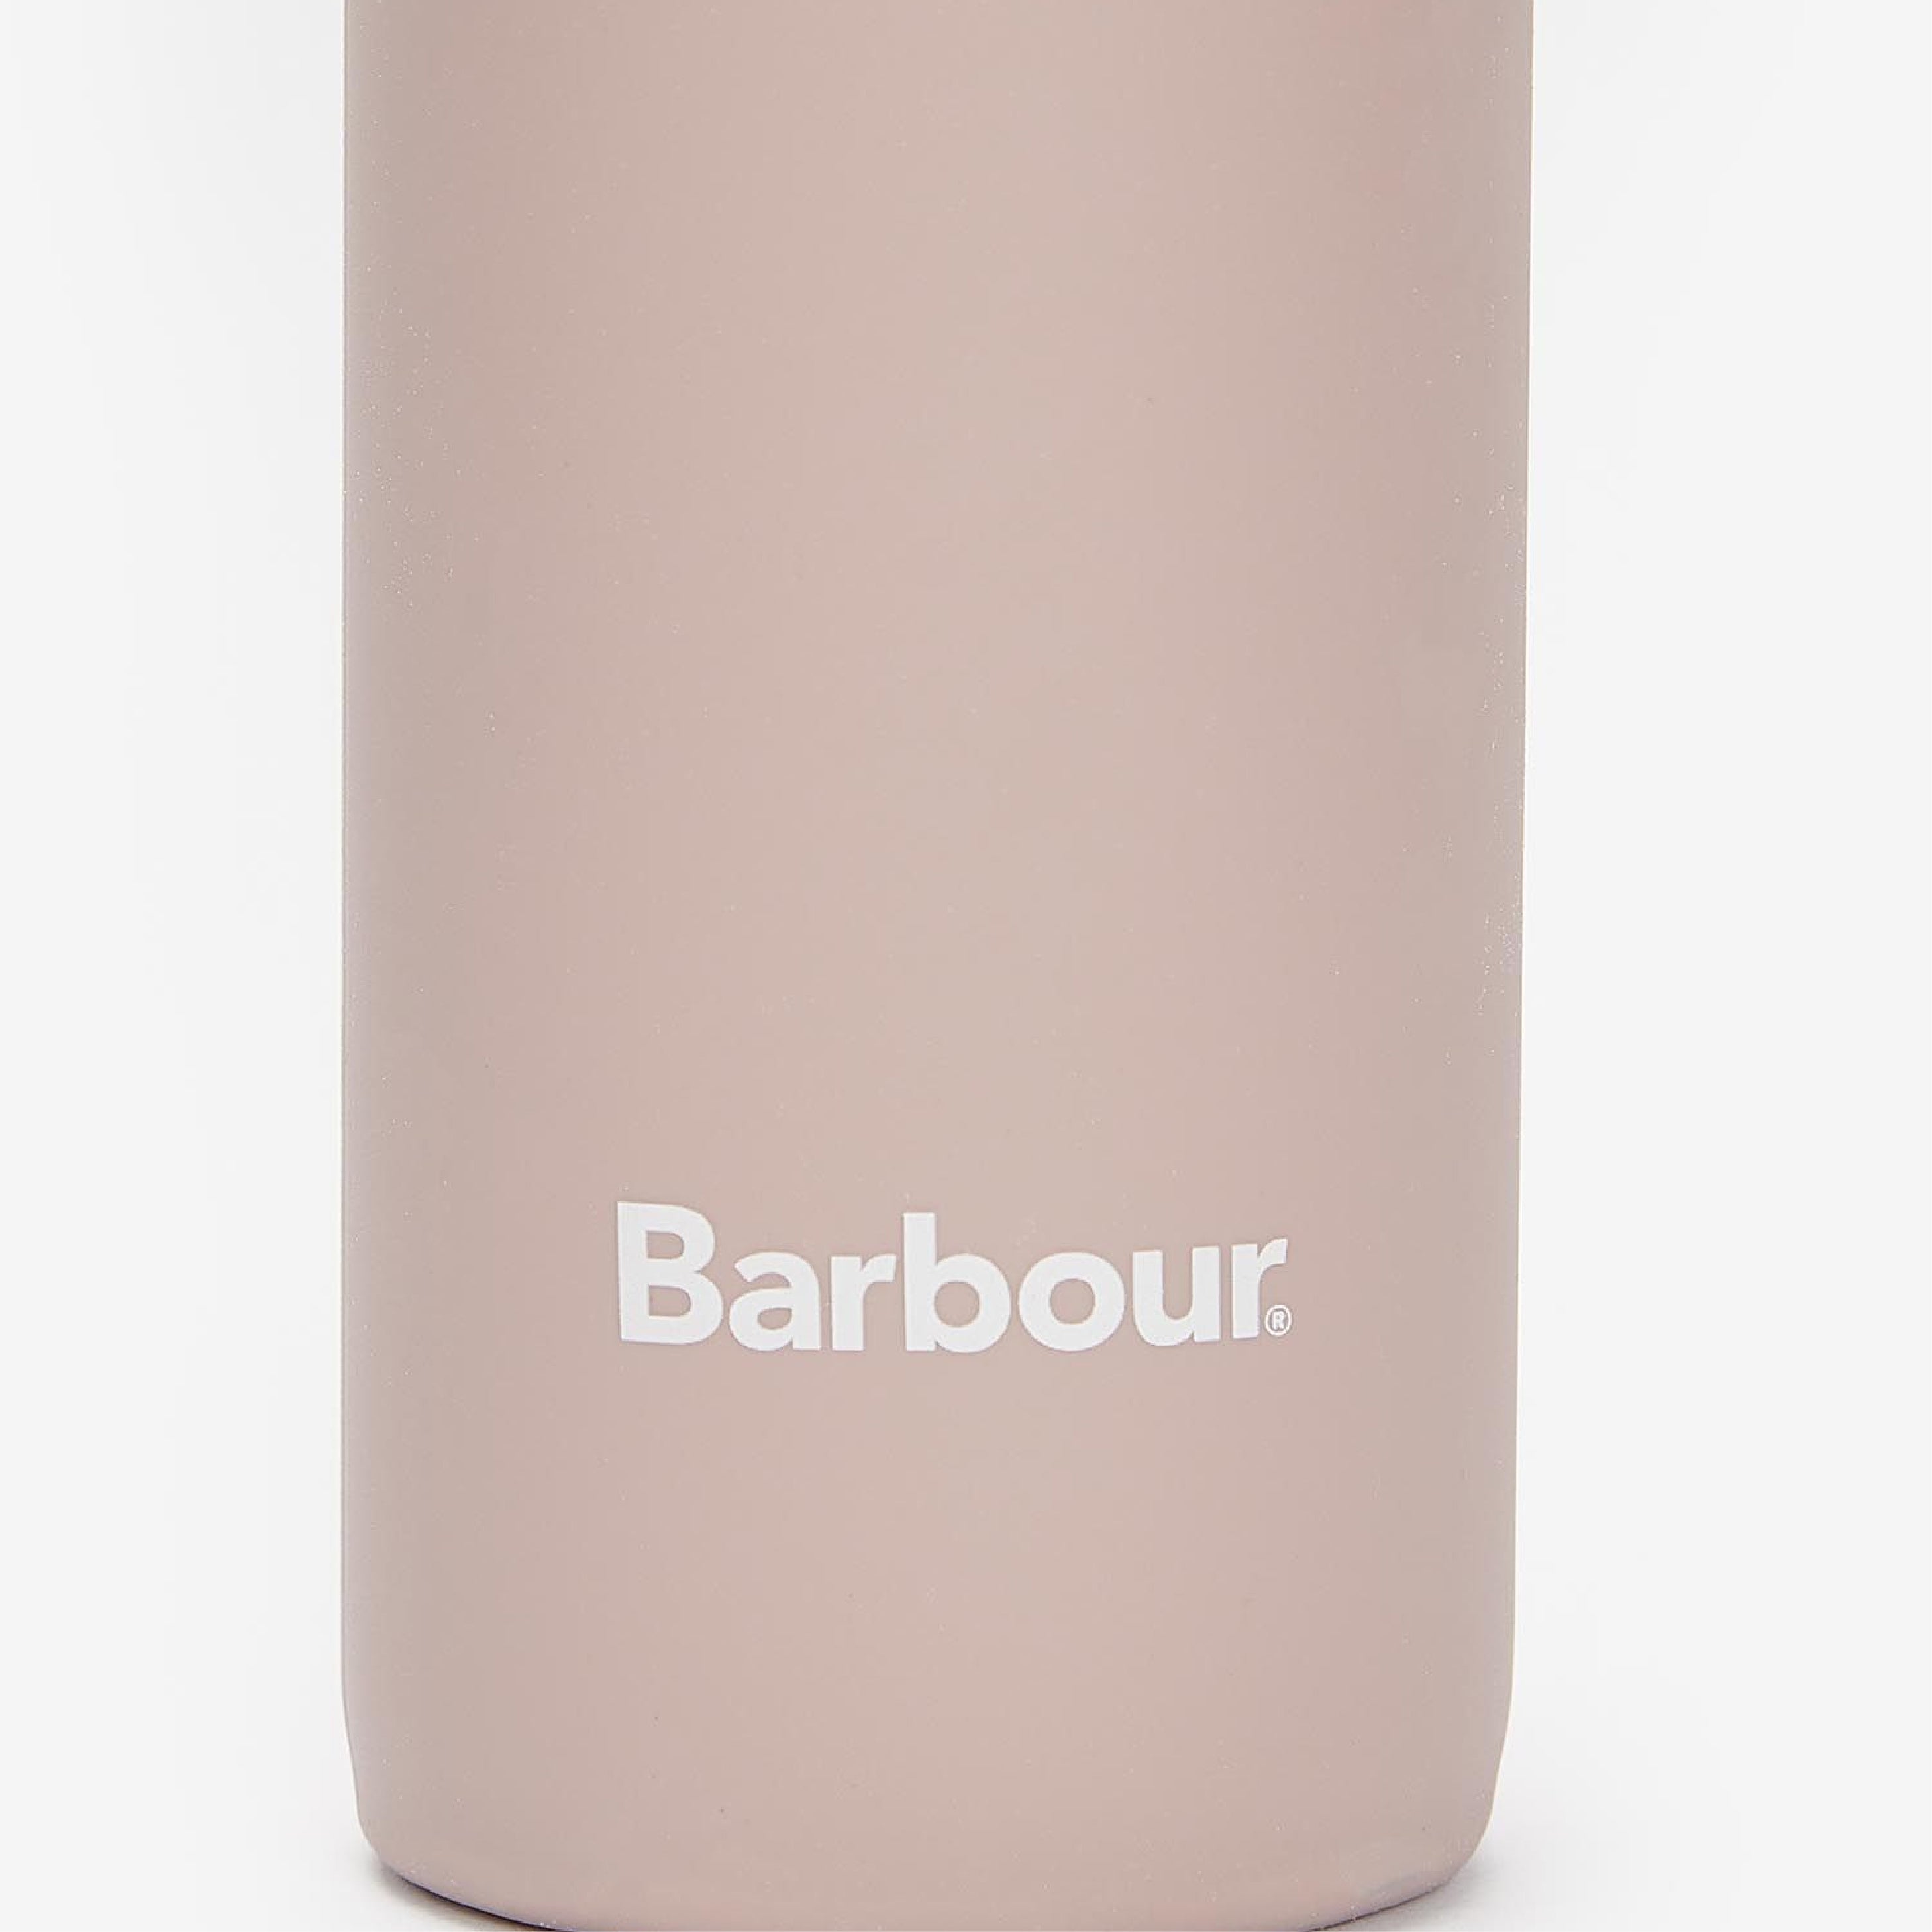 Barbour Glass Bottle